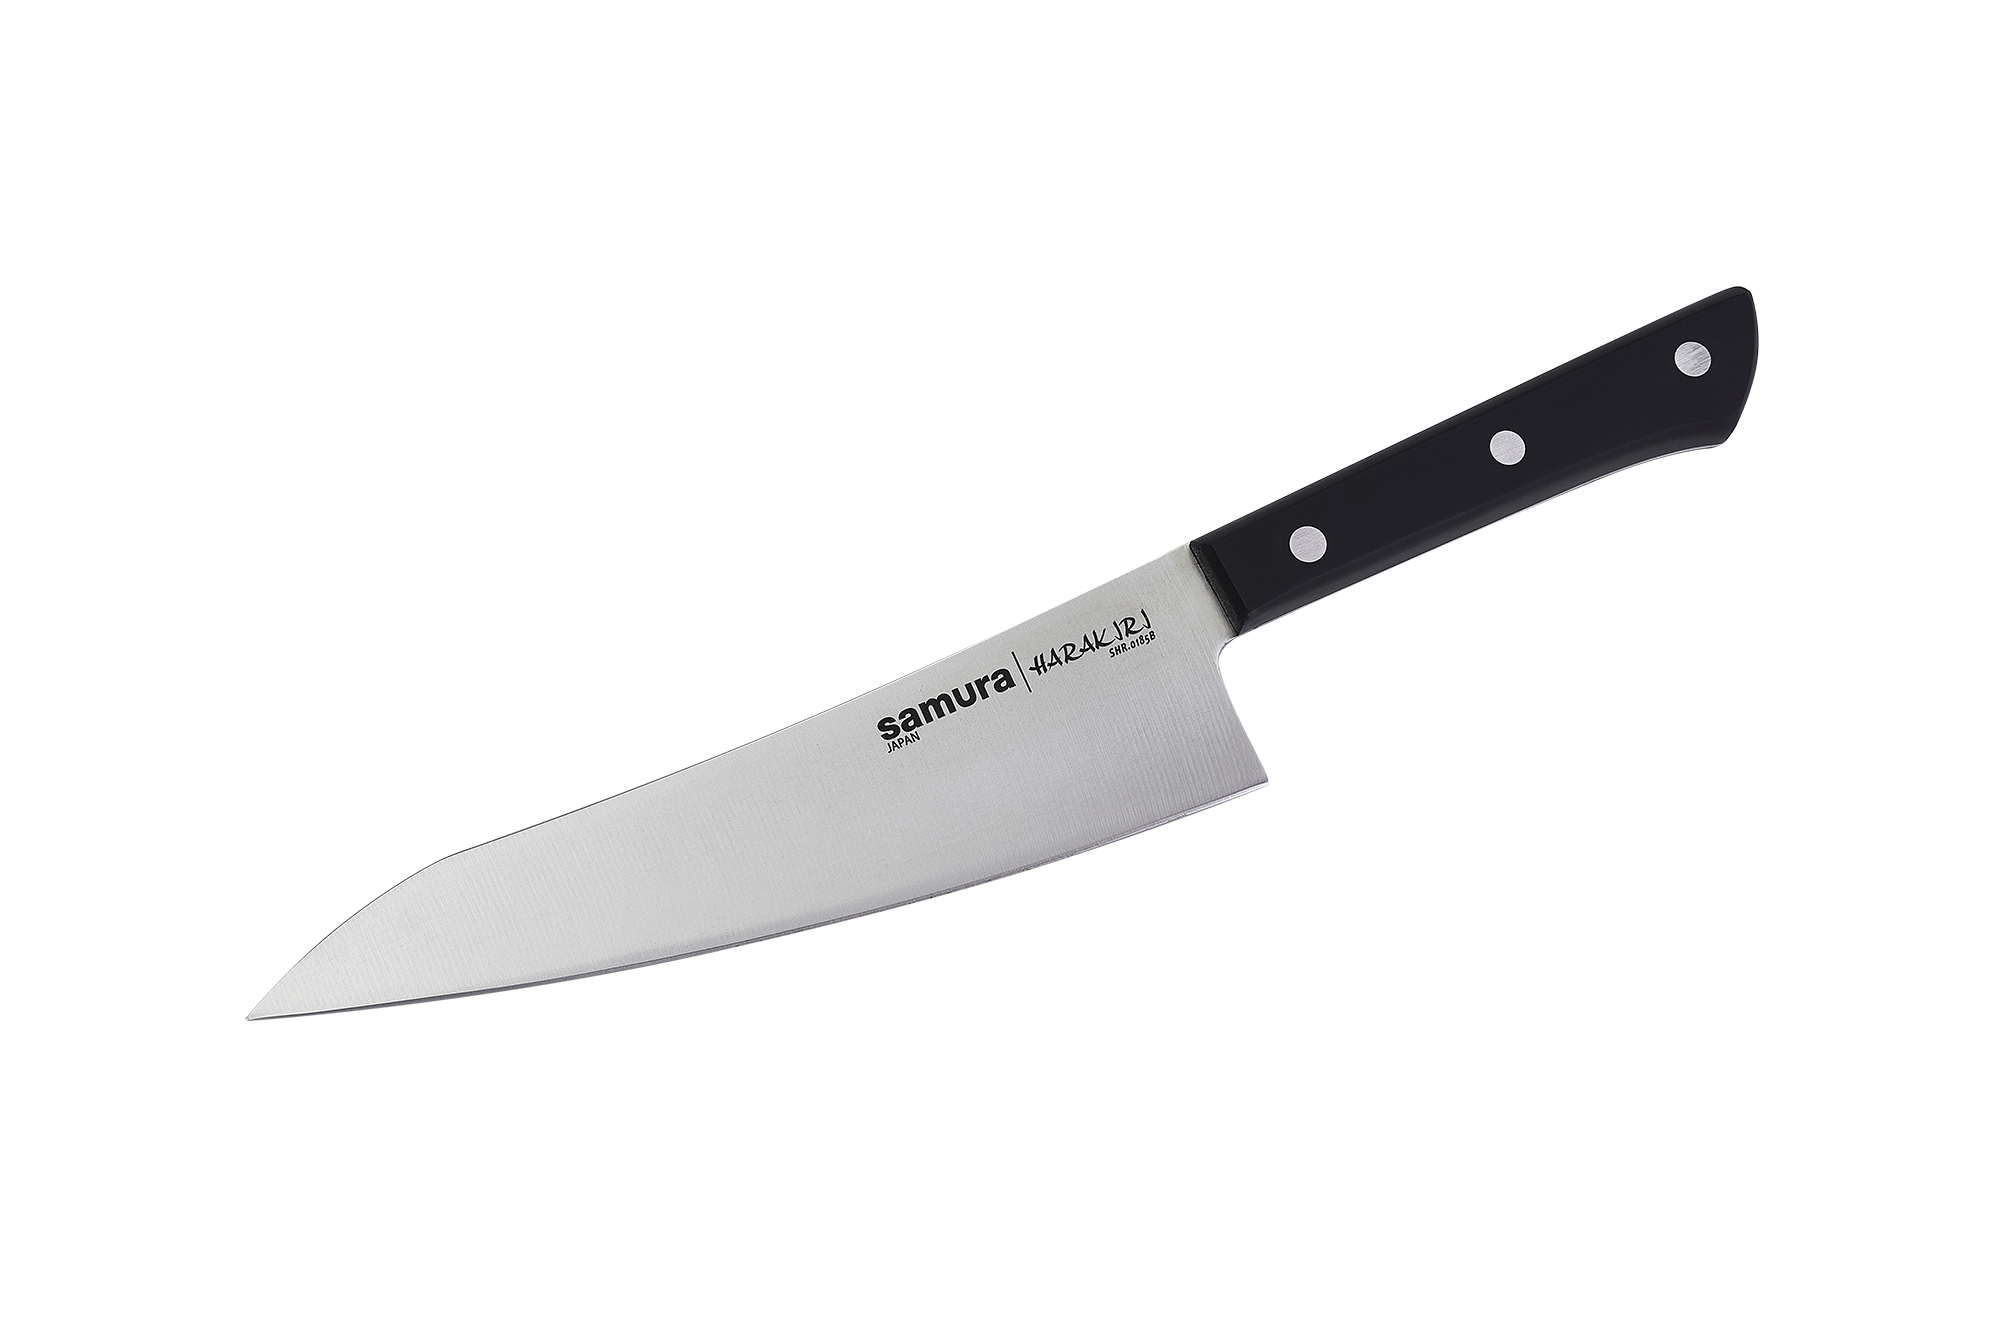 Купить ножи самура в интернет. Samura Harakiri топорик. Нож сантоку Samura Harakiri 17см белый. Нож, топорик, пенек для рубки мяса.